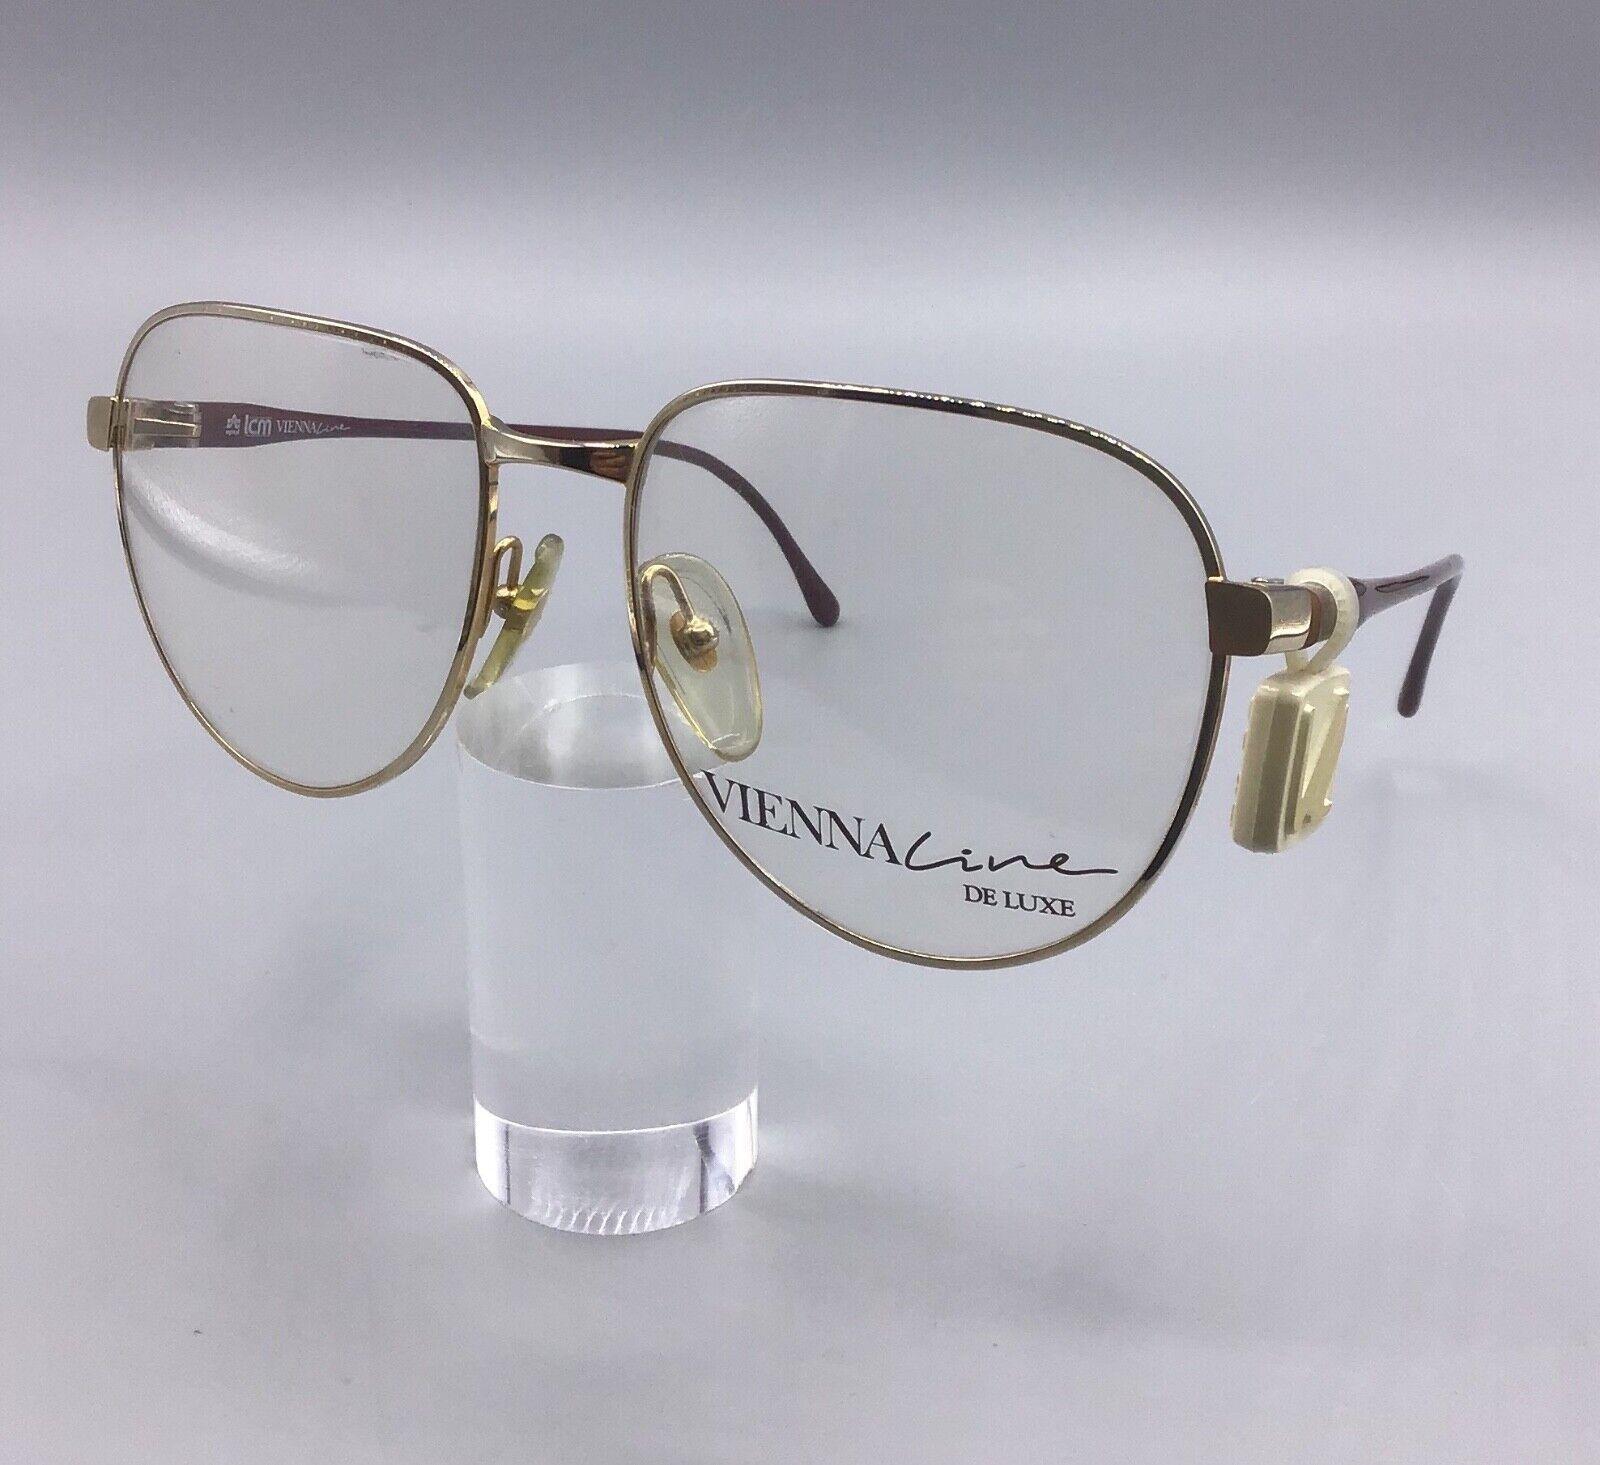 Viennaline occhiale vintage eyewear frame made in Germany 1440 43 laminated 20k